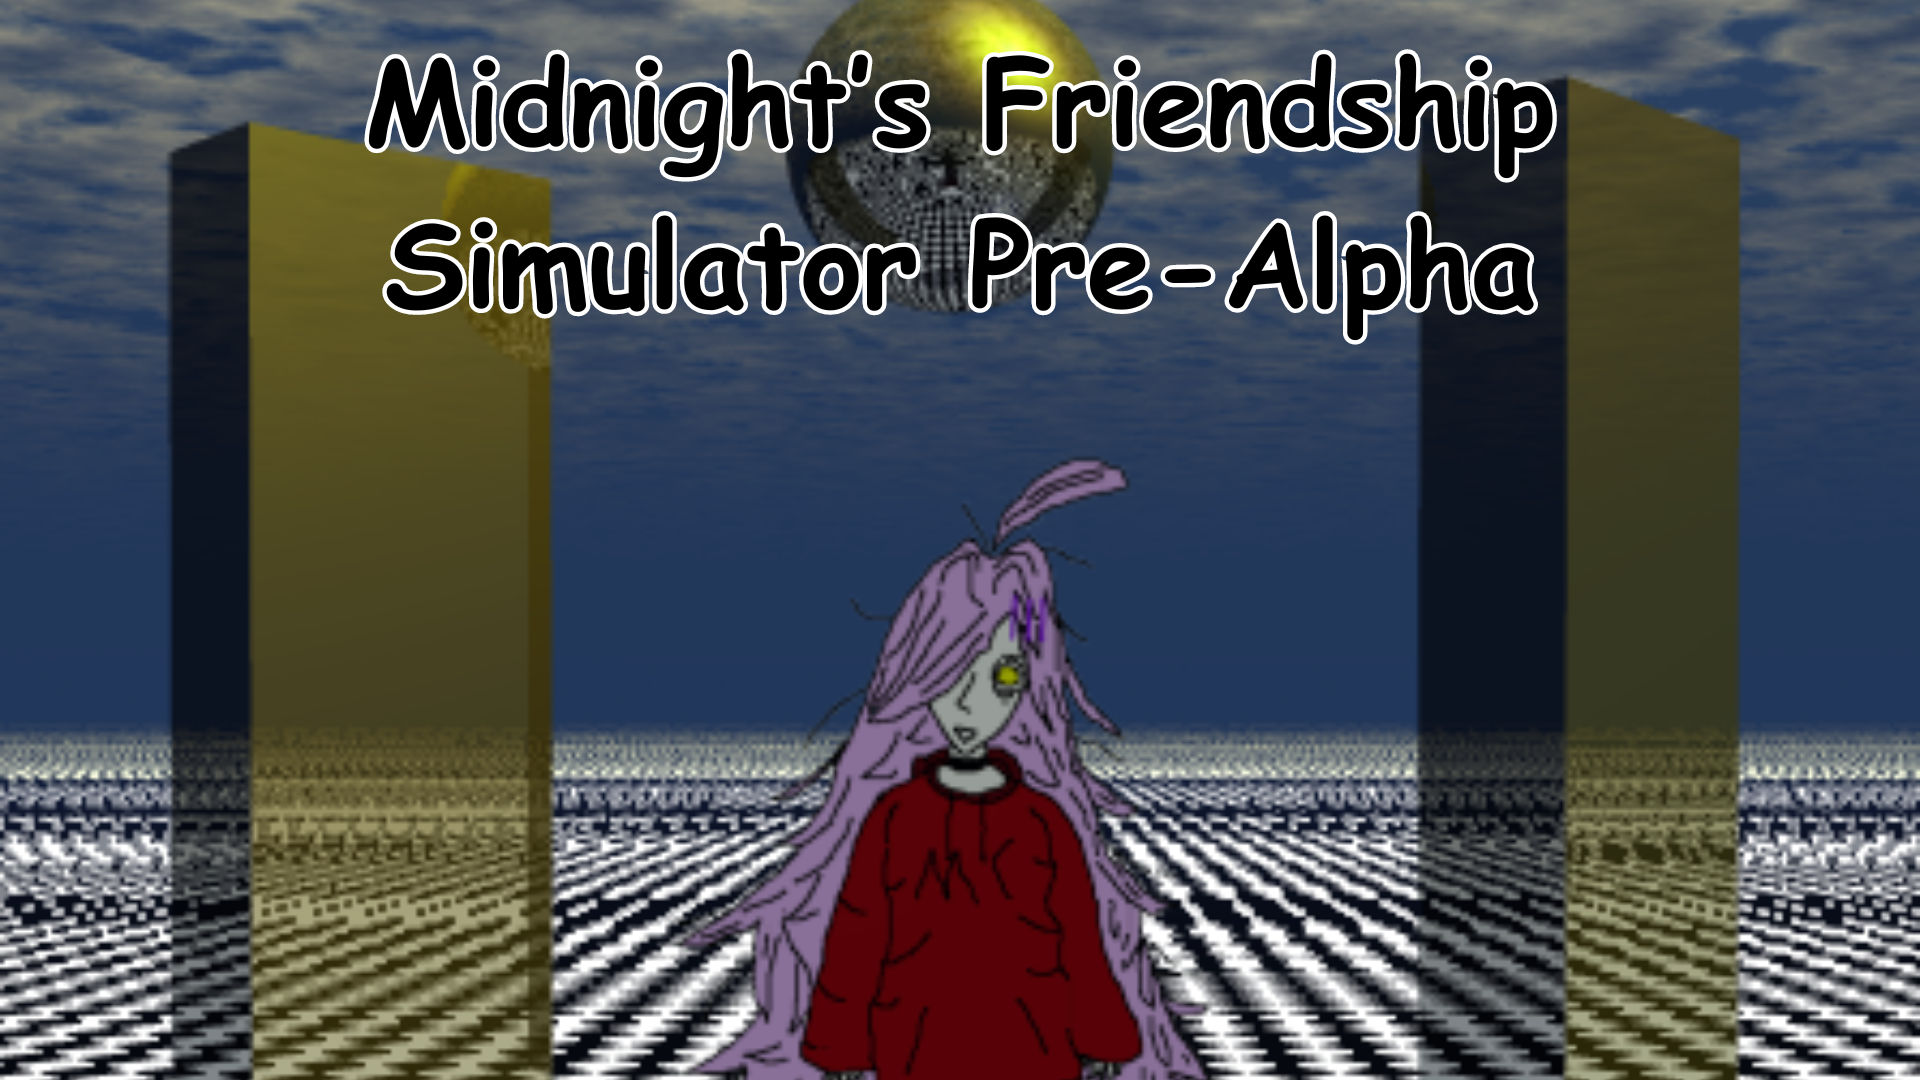 Midnight's Friendship Simulator Pre-Alpha